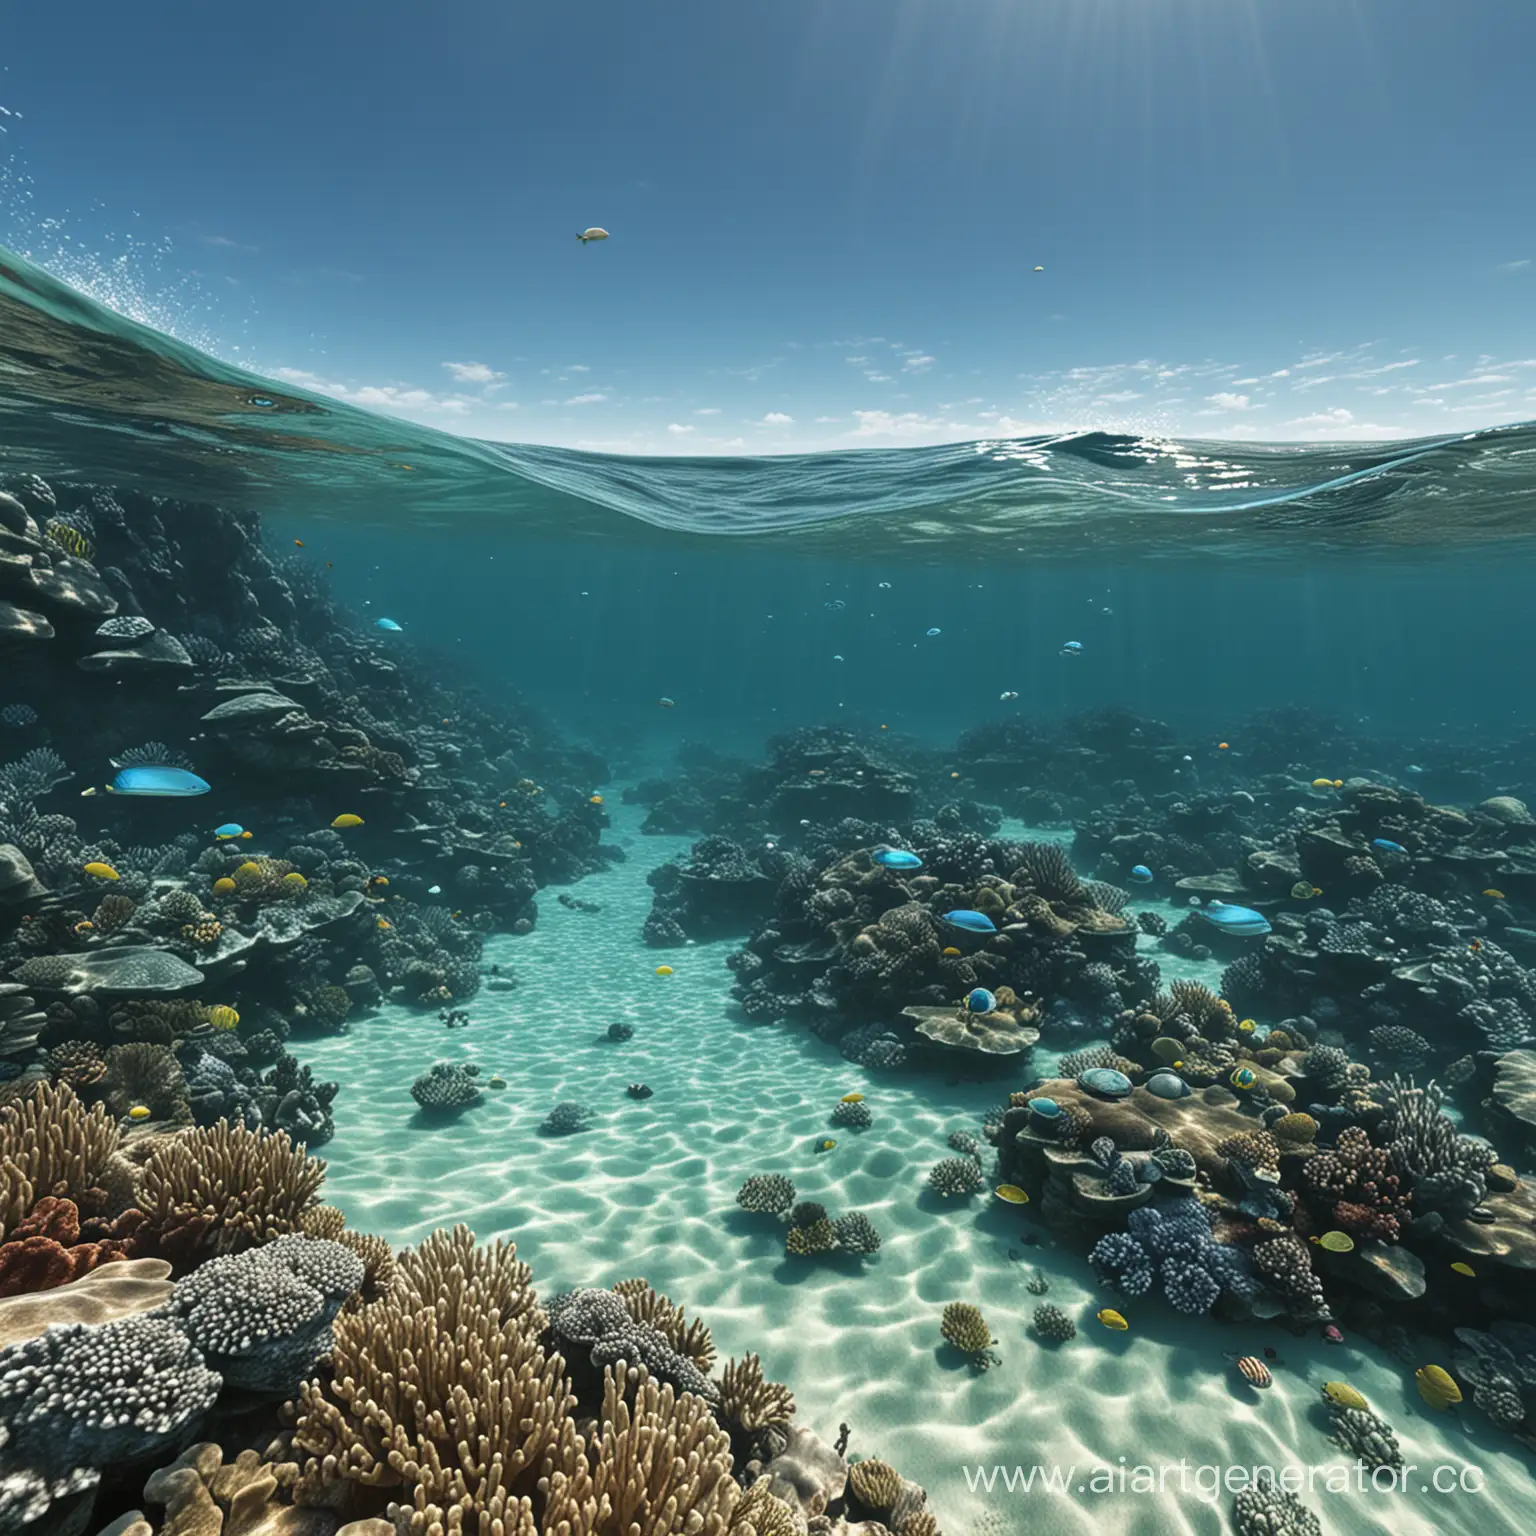 Underwater-Exploration-Vivid-3D-Ocean-Scene-with-Marine-Life